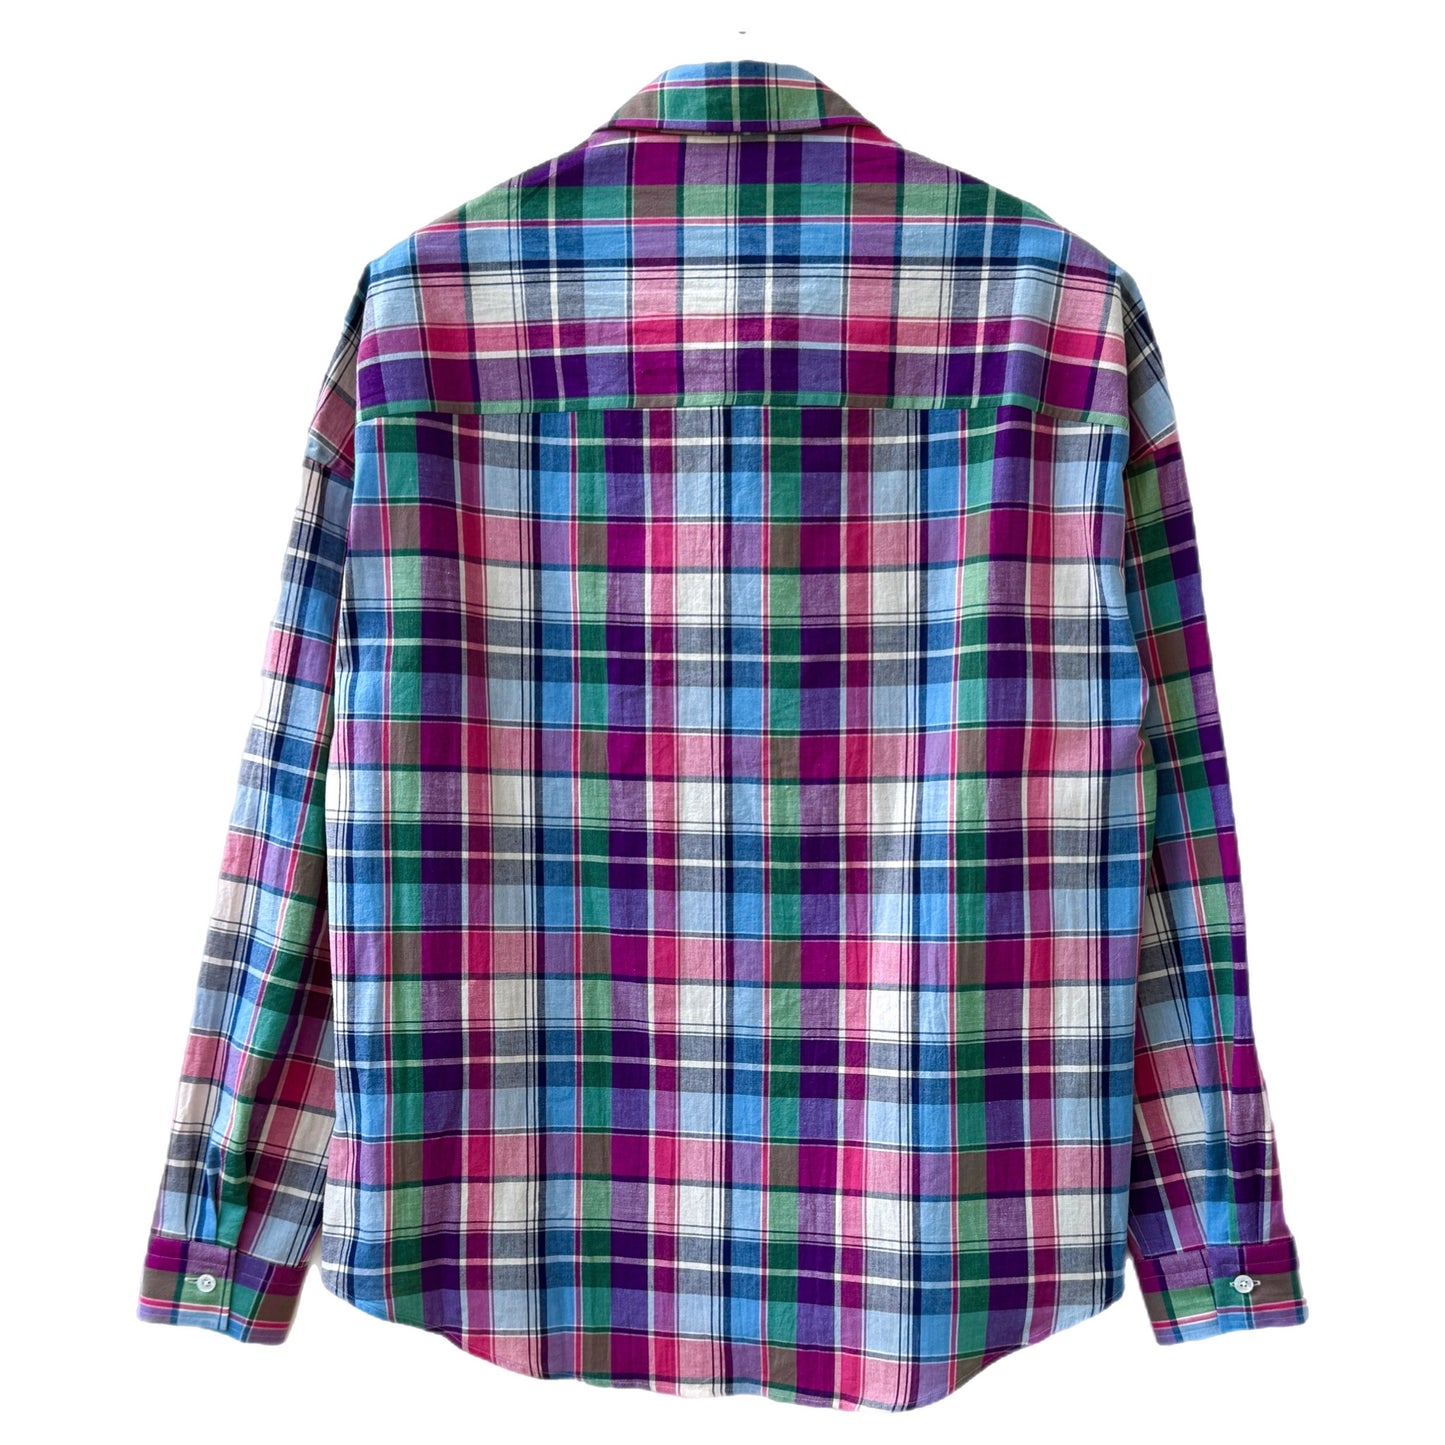 COLONY CLOTHING / プールサイドシャツ ピンクチェック / CC2401-SH02-02